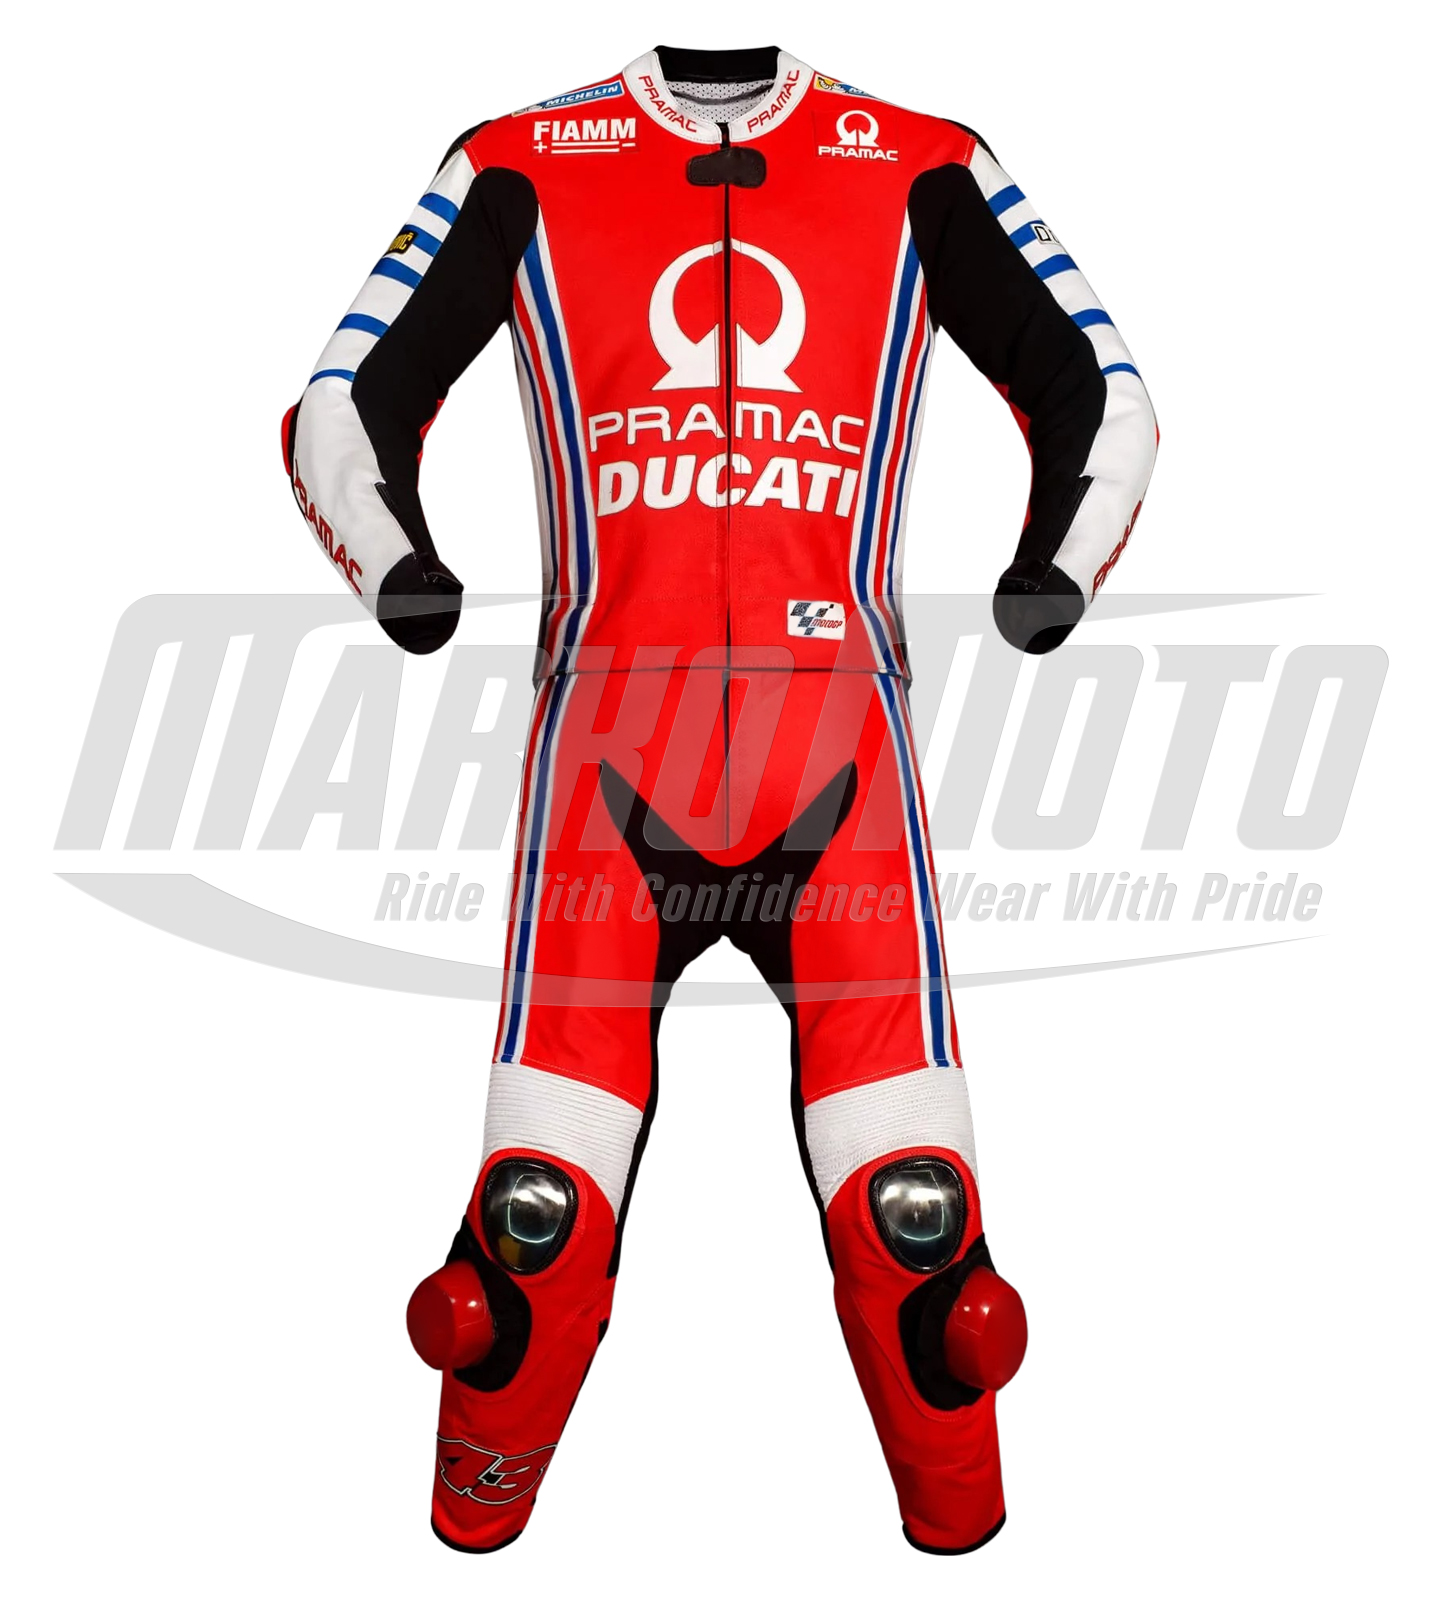 Scott Redding Motorcycle Racing Suit Ducati aruba.it WSBK 2020